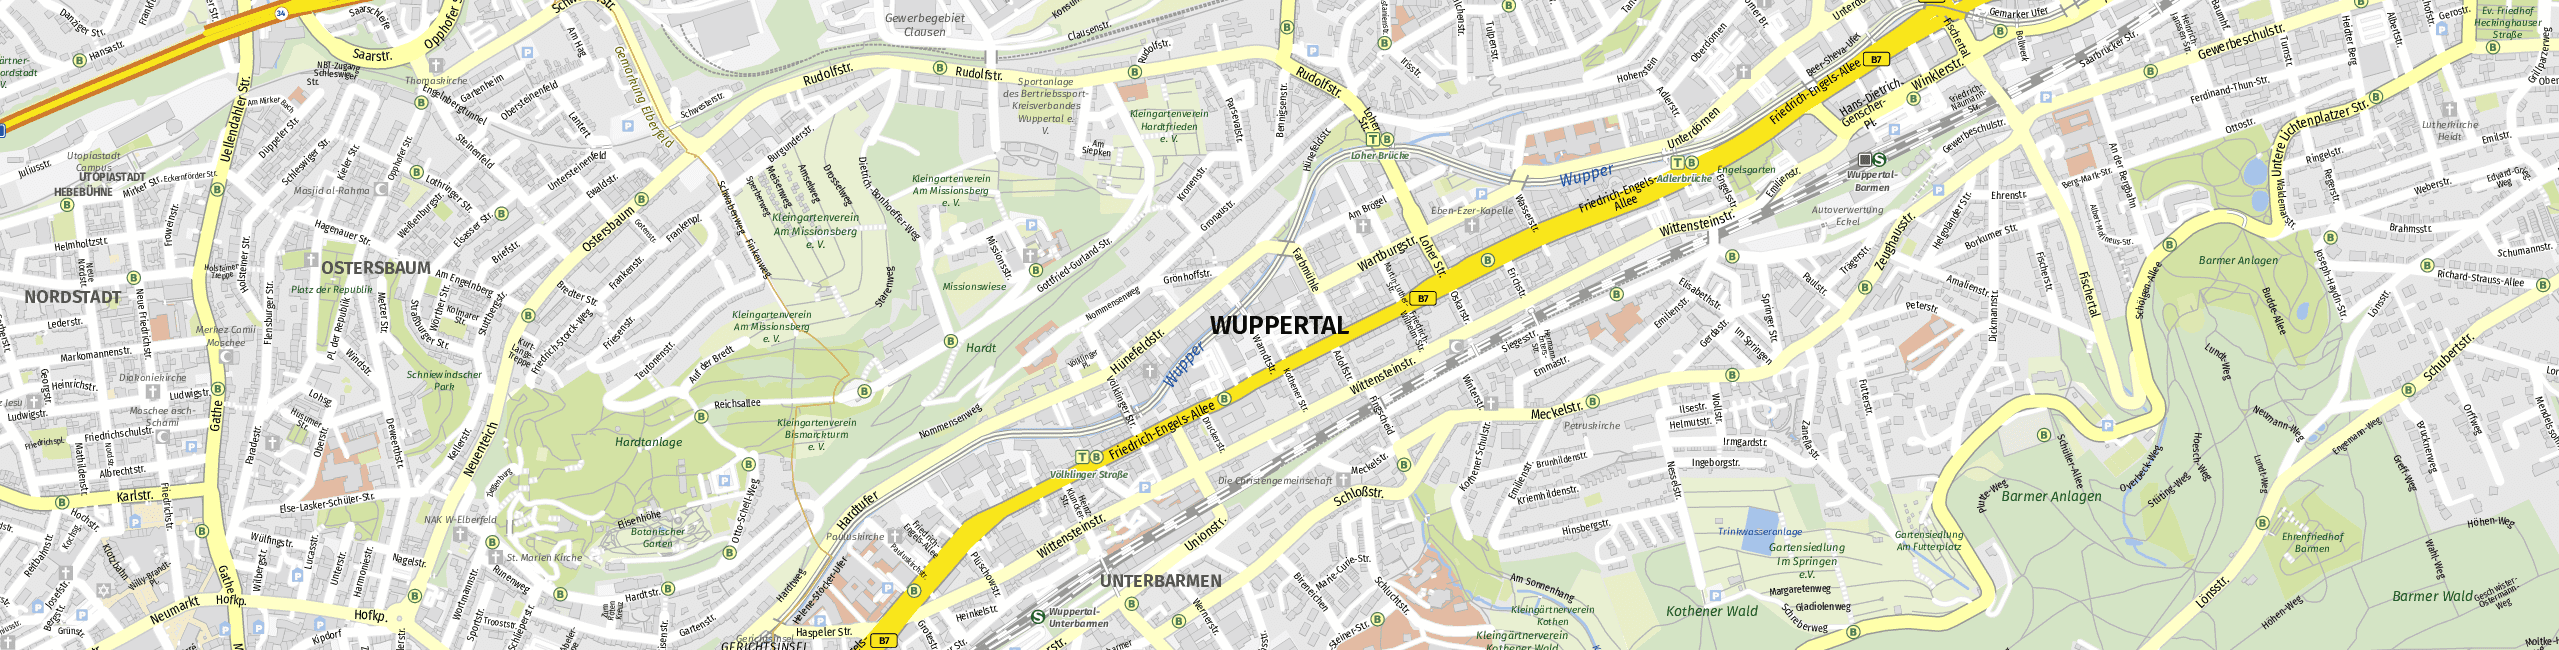 Stadtplan Wuppertal zum Downloaden.